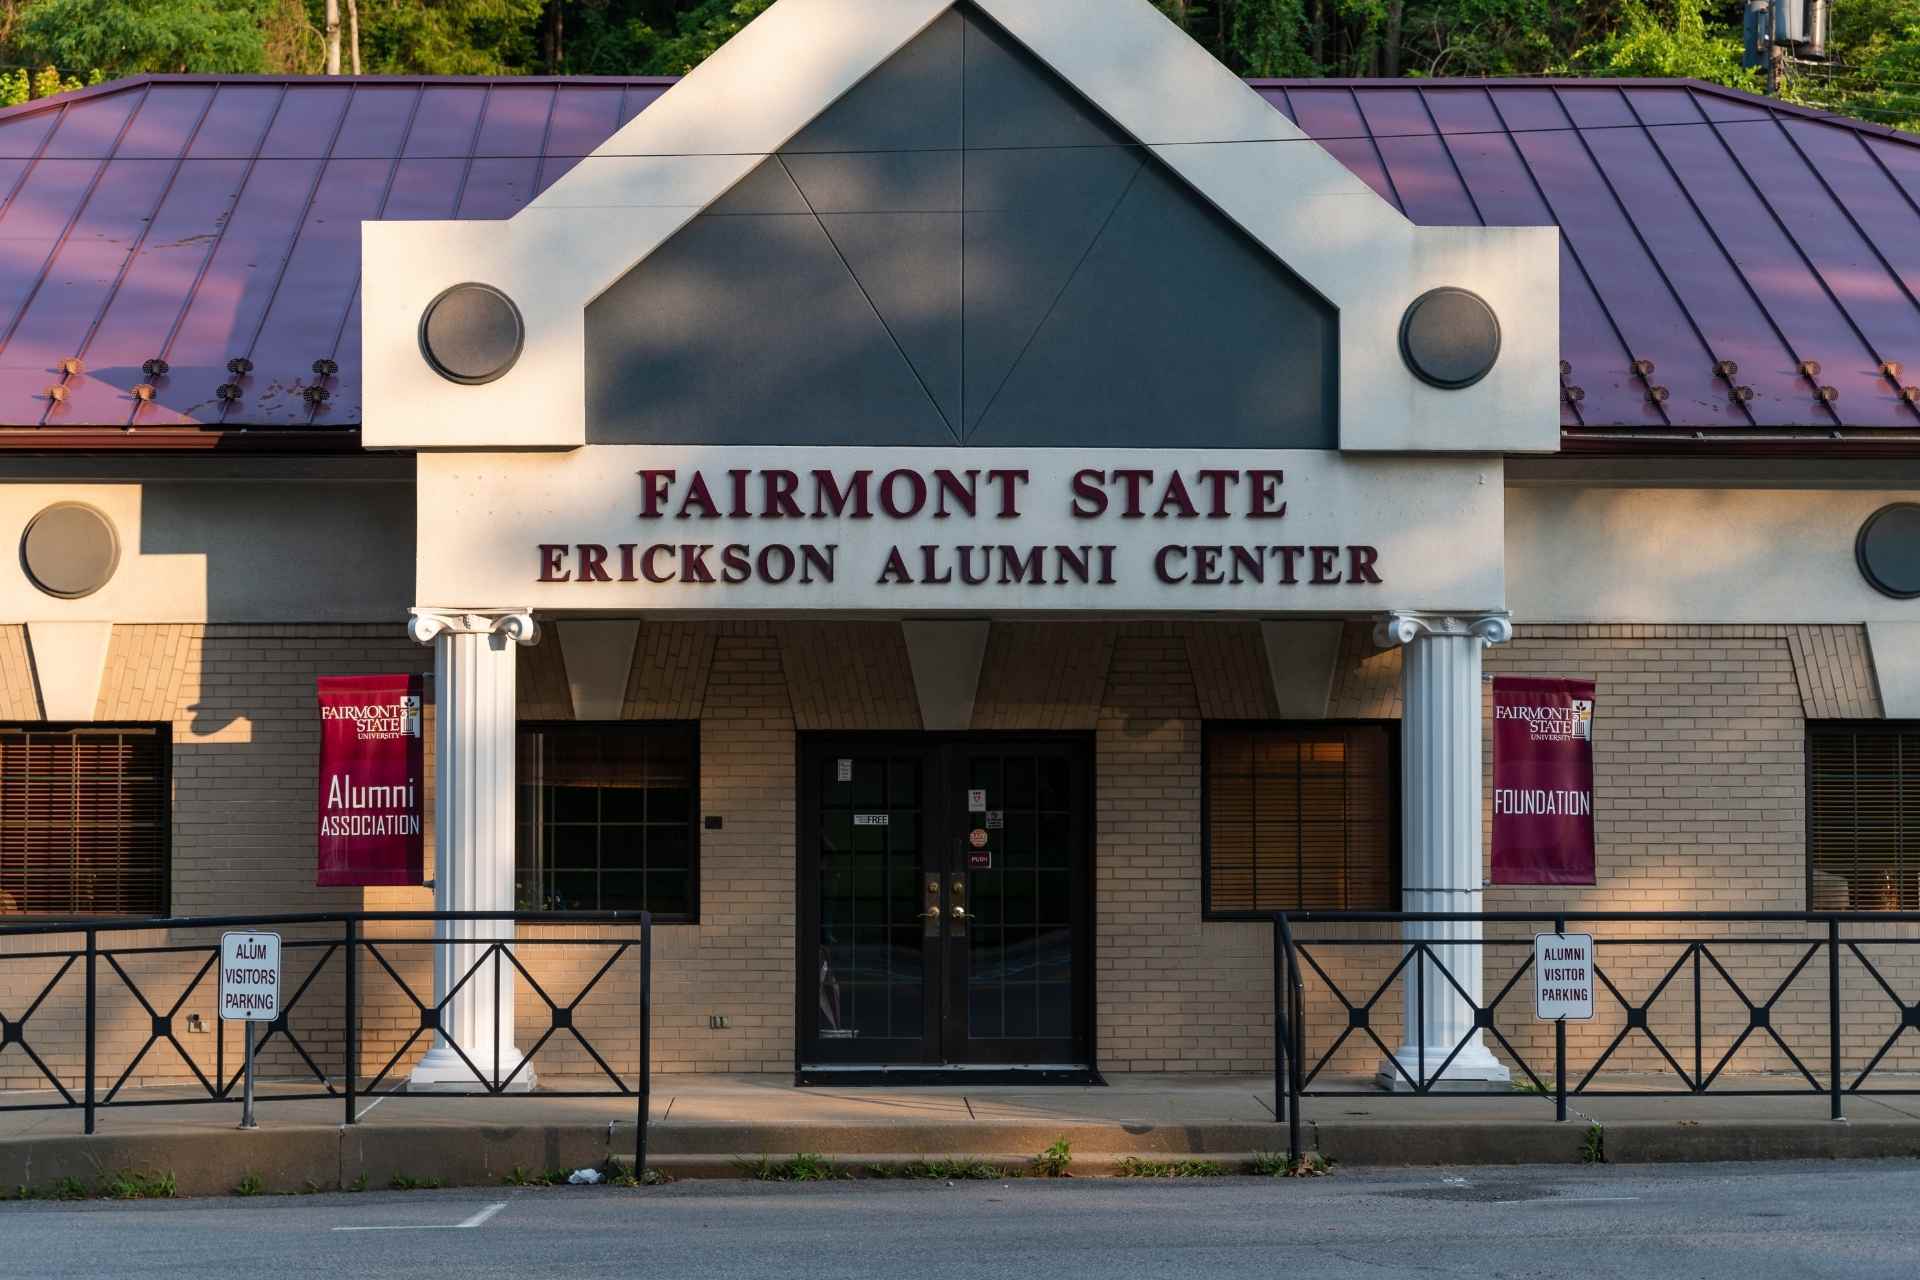 Fairmont State Erickson Alumni Center